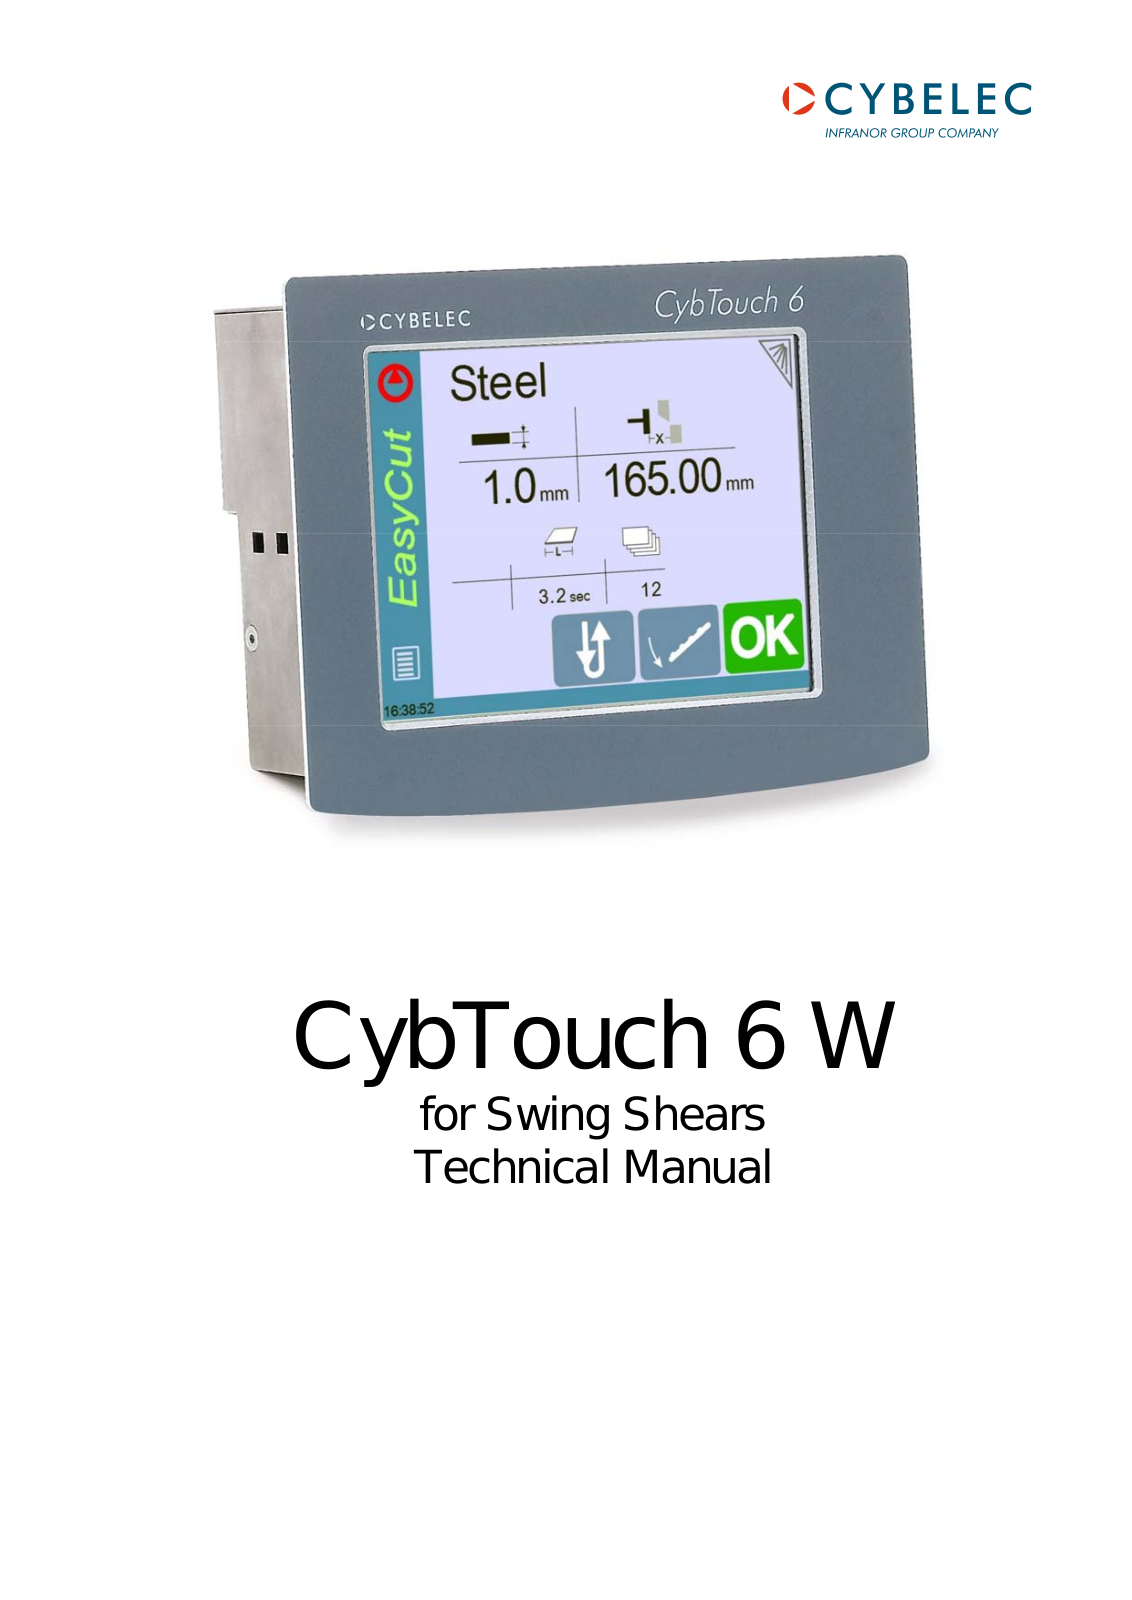 cybelec CybTouch 6W Technical Manual